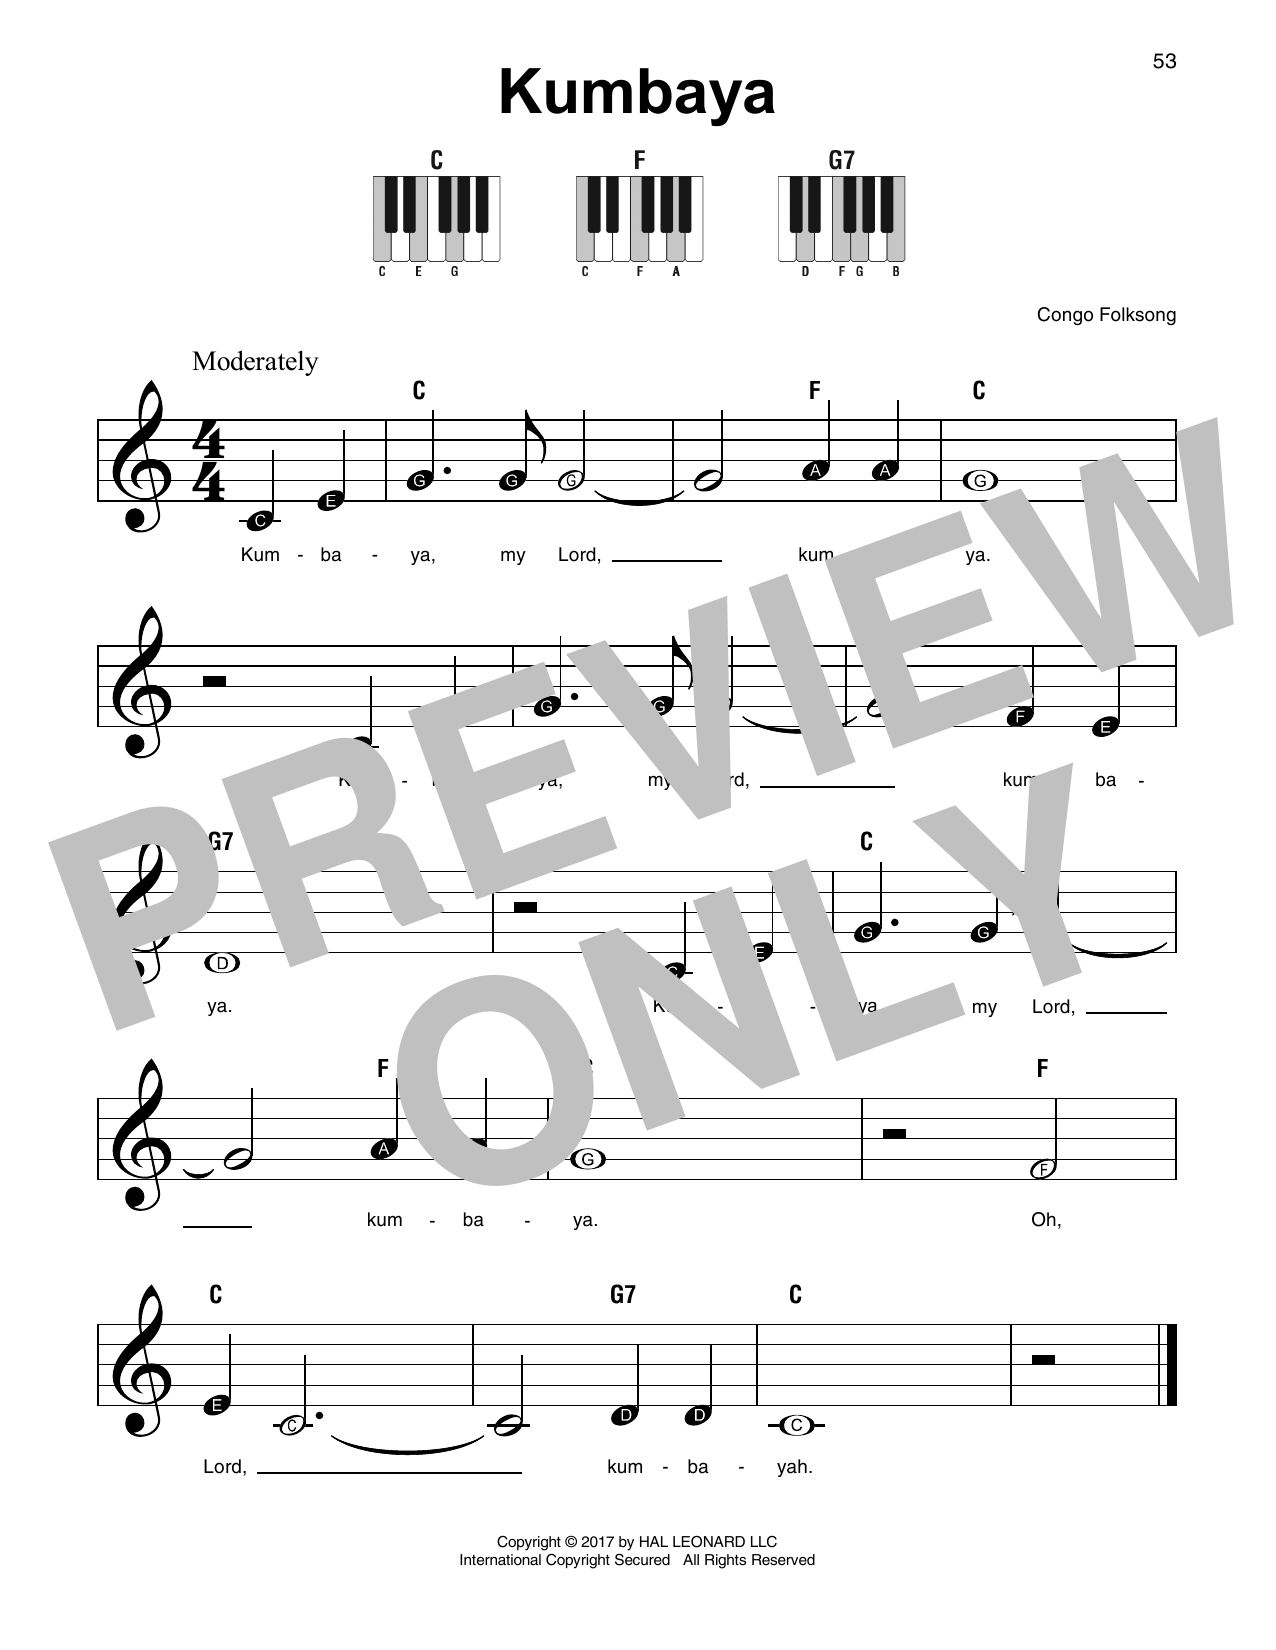 Congo Folksong Kumbaya Sheet Music Notes & Chords for Guitar Tab - Download or Print PDF